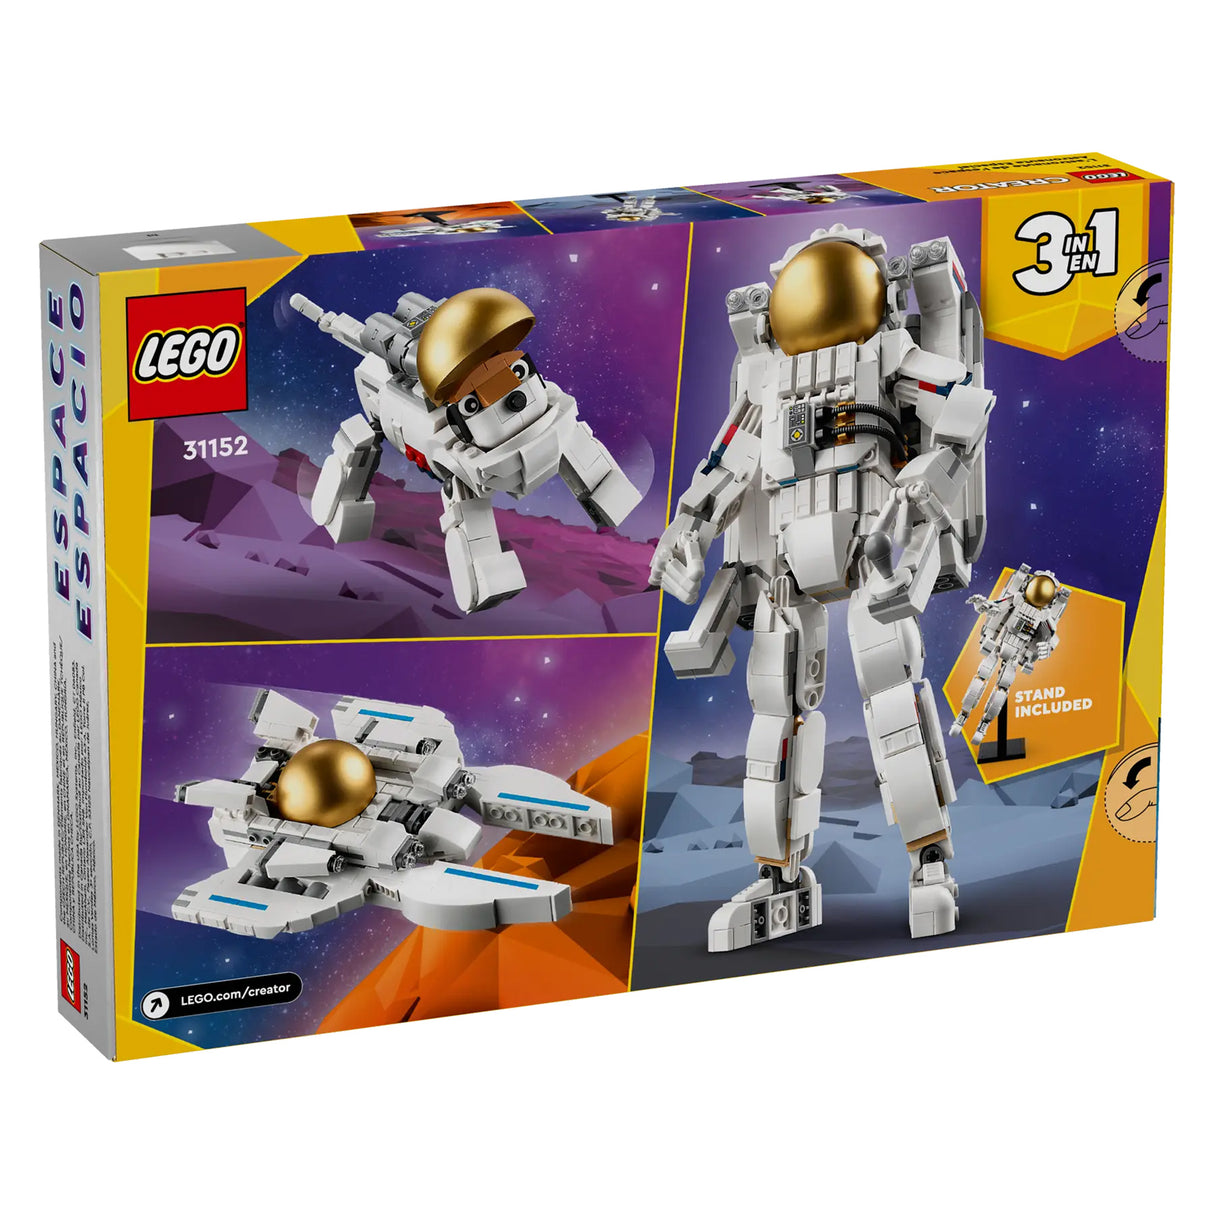 LEGO Creator Space Astronaut 31152, (647-pieces)